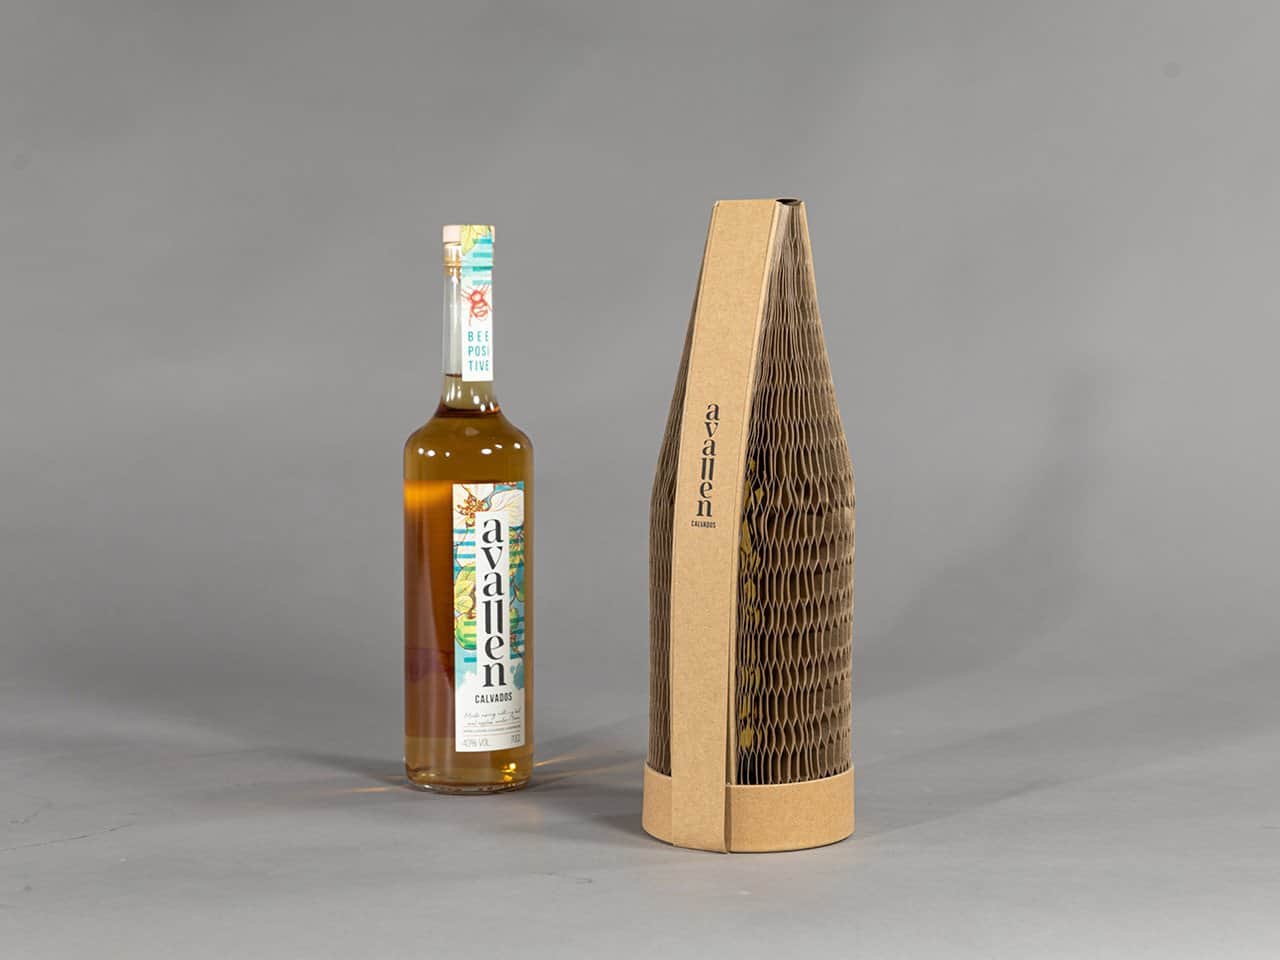 Flexi-Hex Sustainable Bottle Packaging for Avallen Spirits